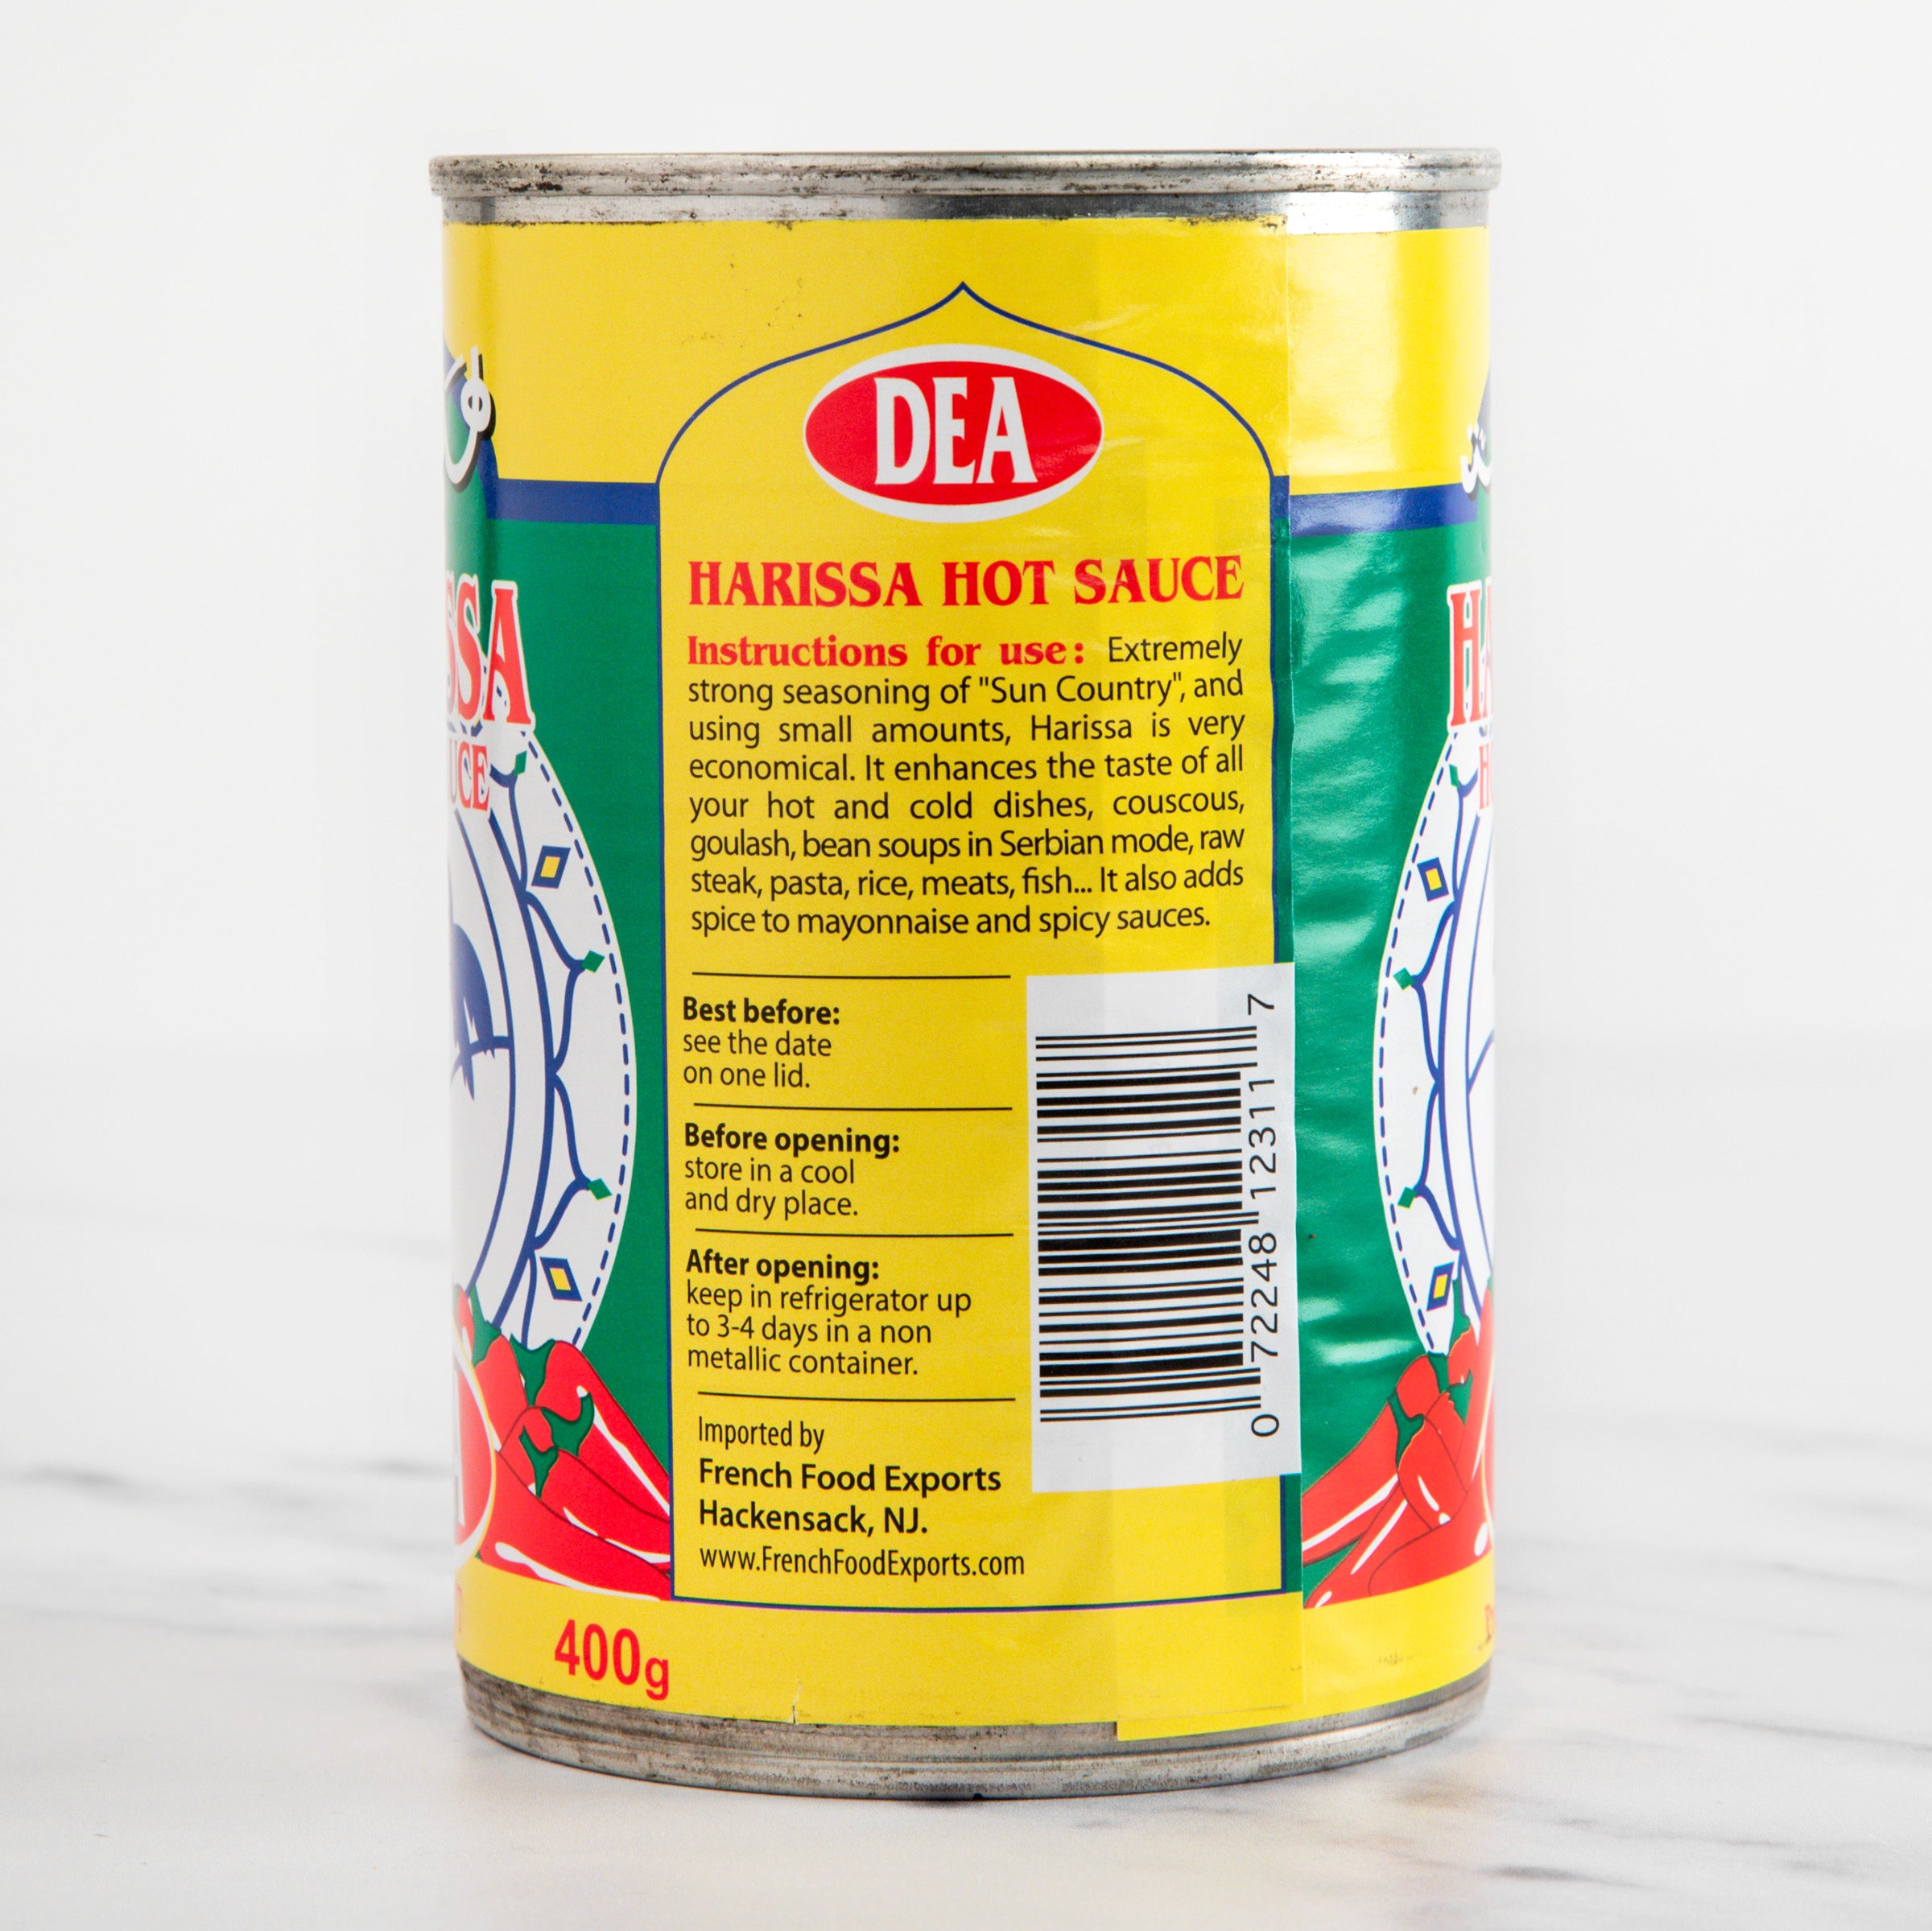 Product Spotlight - Food Packaging Metal Tins